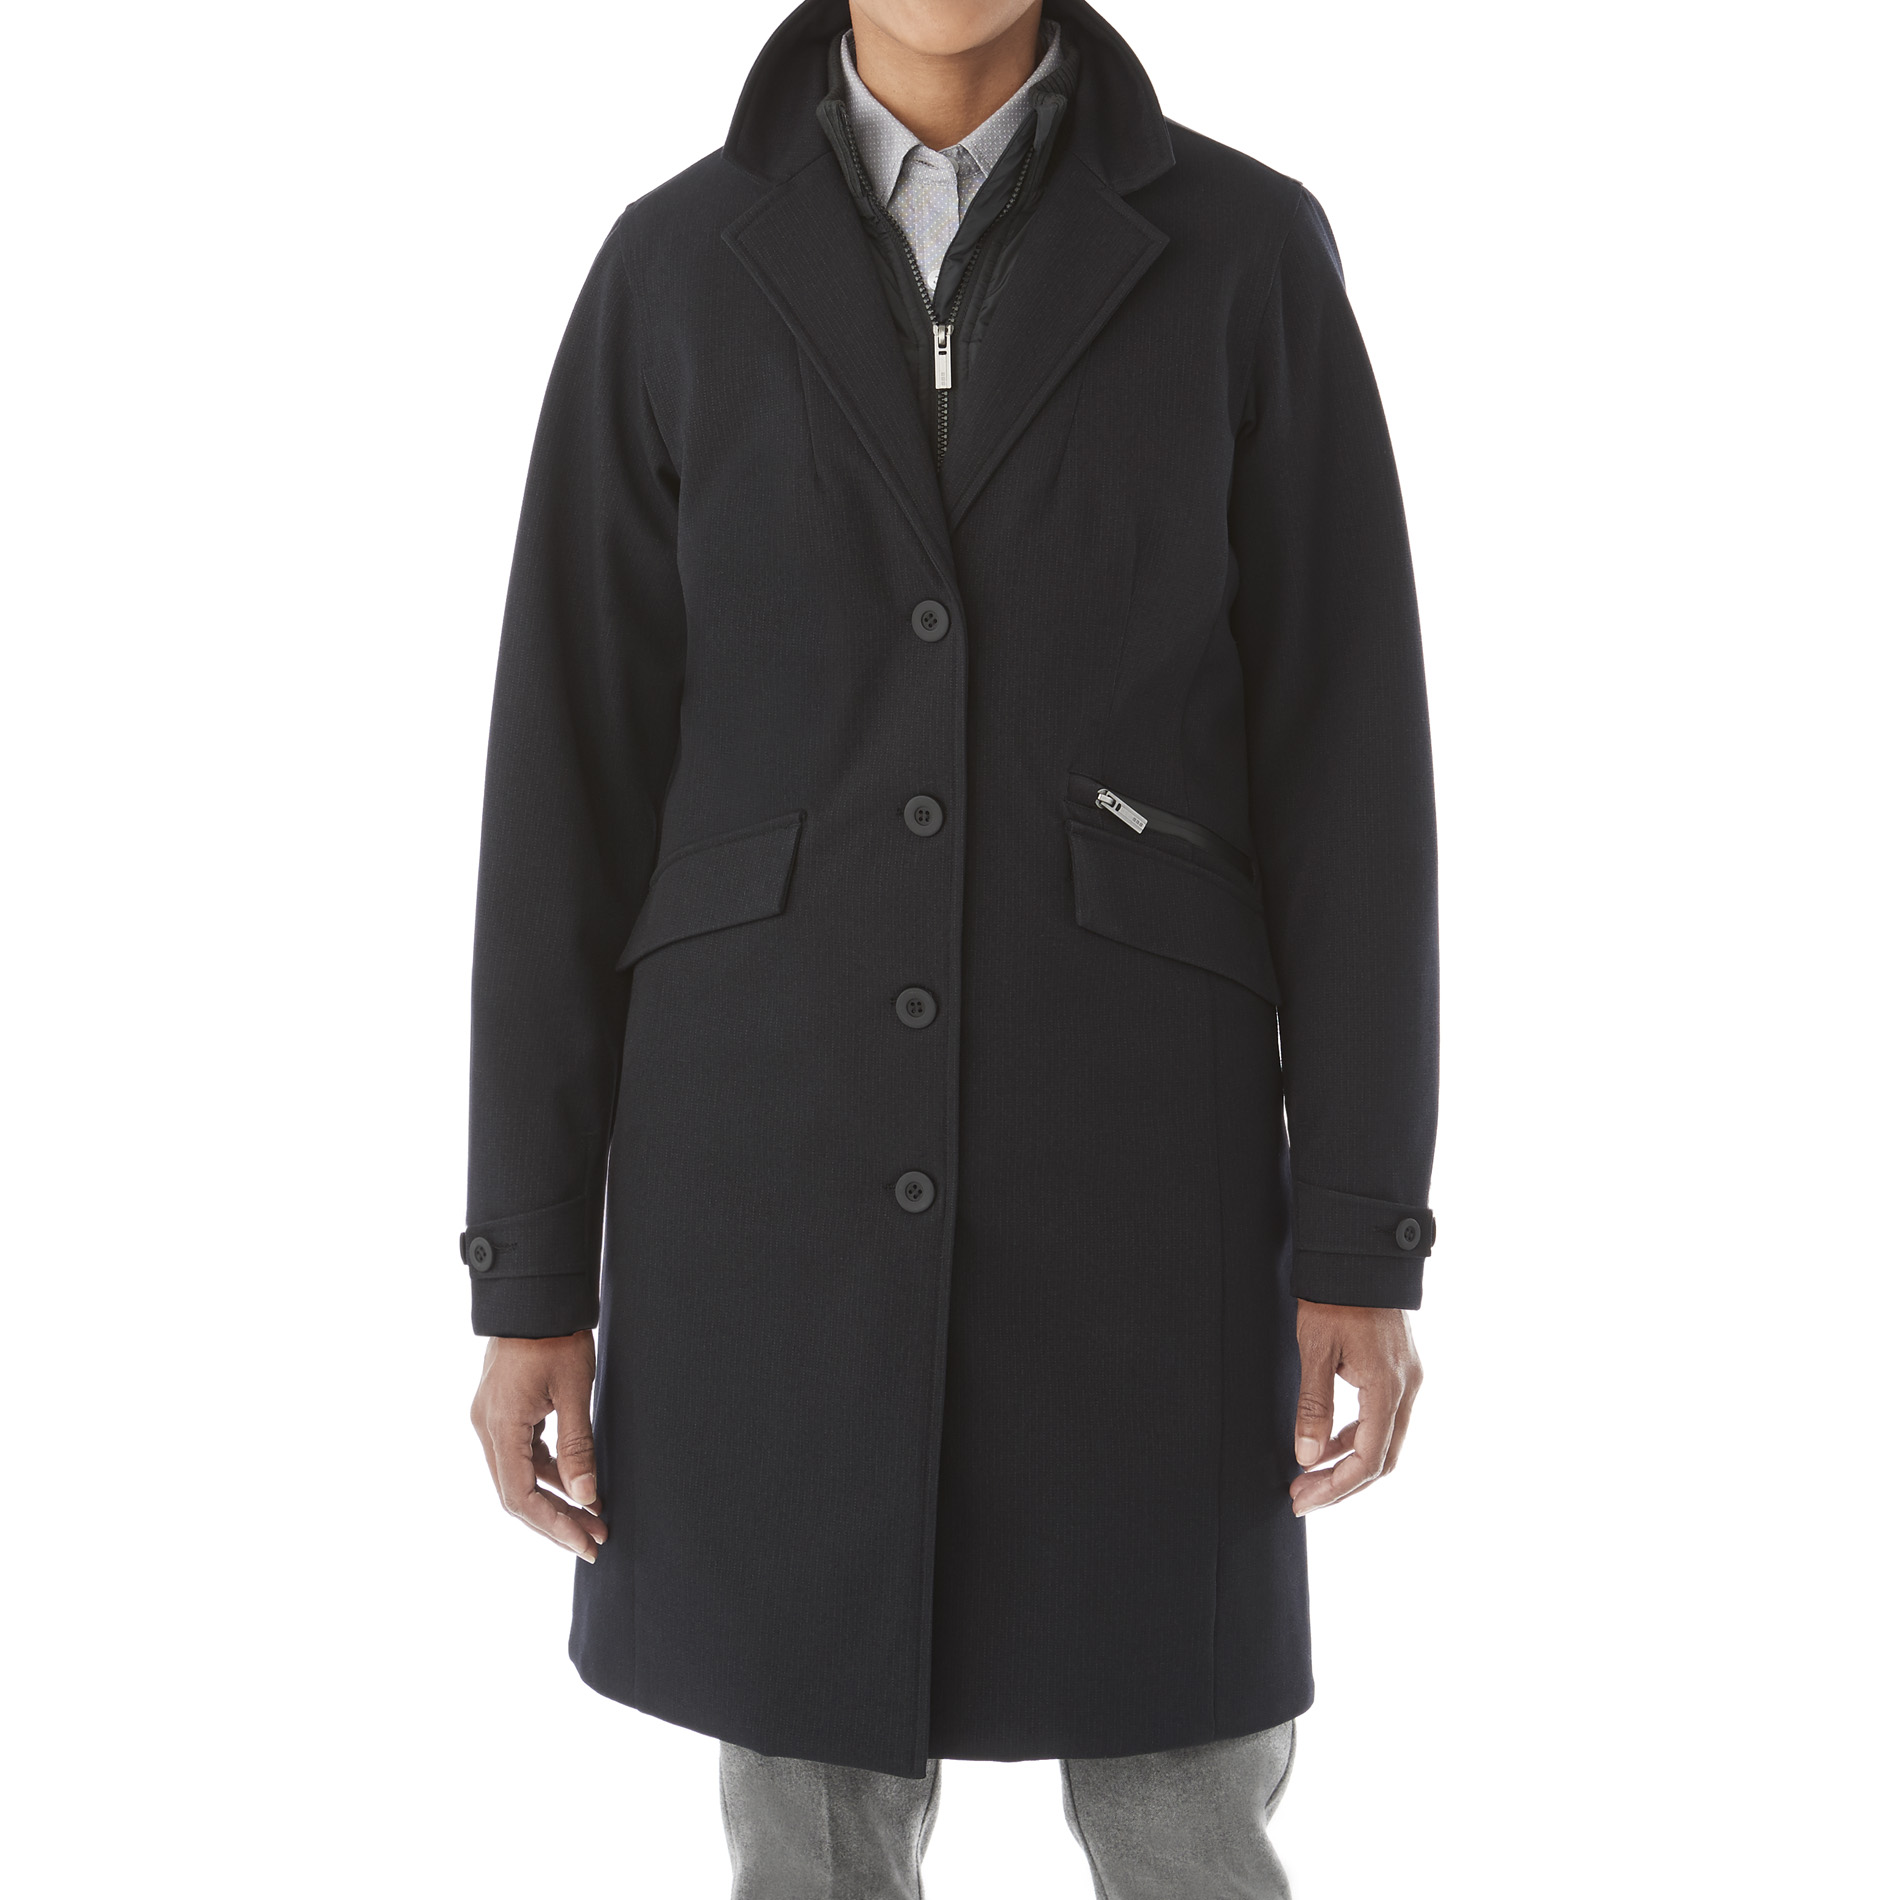 Trimark TM99703 - Women's RIVINGTON Insulated Jacket $139.84 - Outerwear